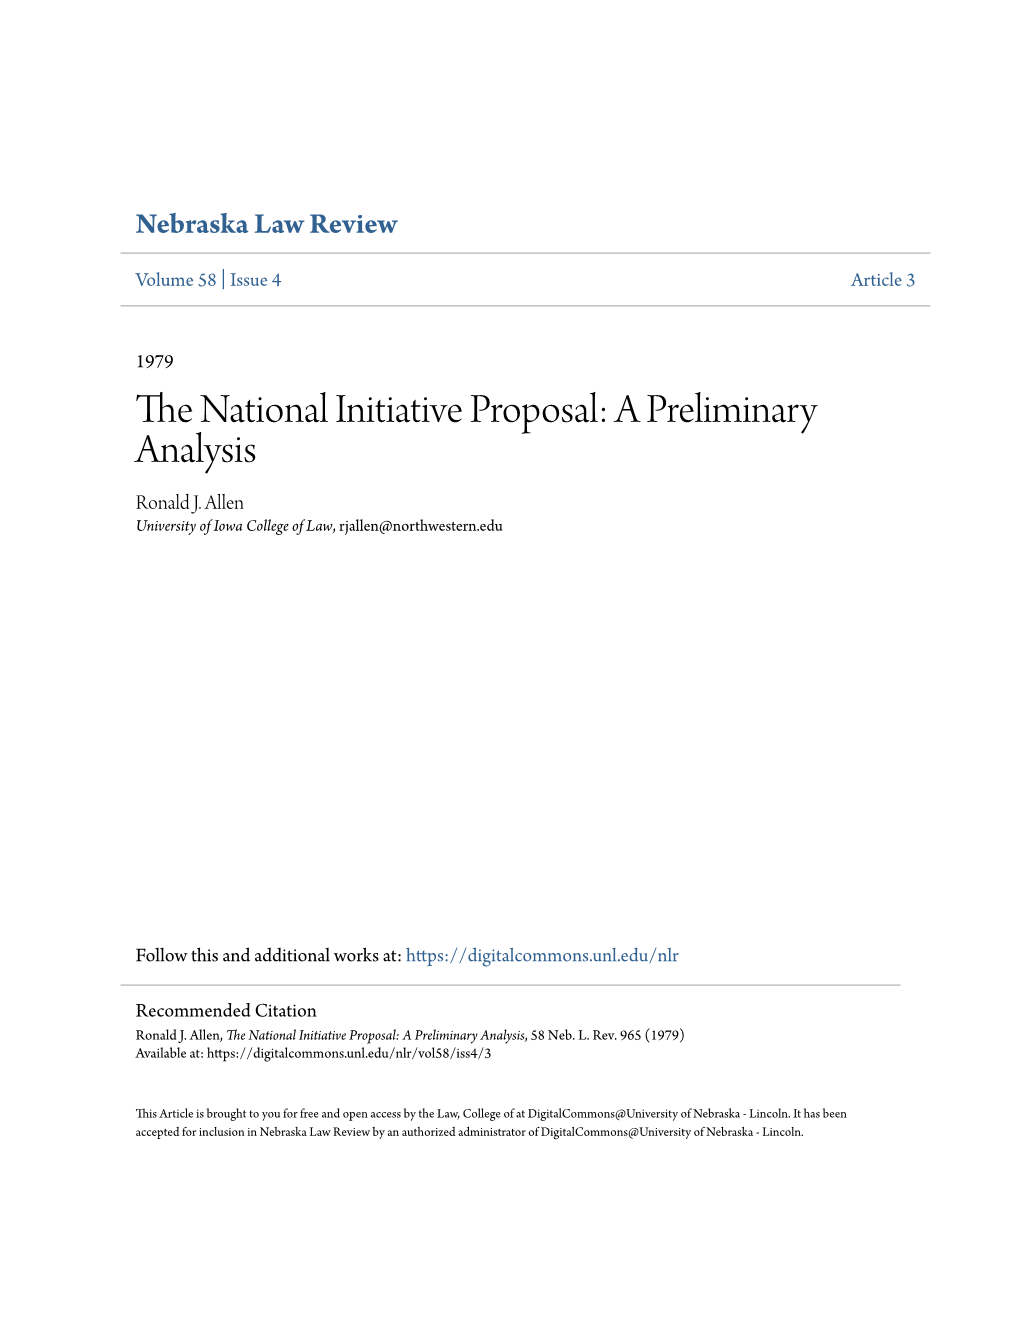 The National Initiative Proposal: a Preliminary Analysis, 58 Neb